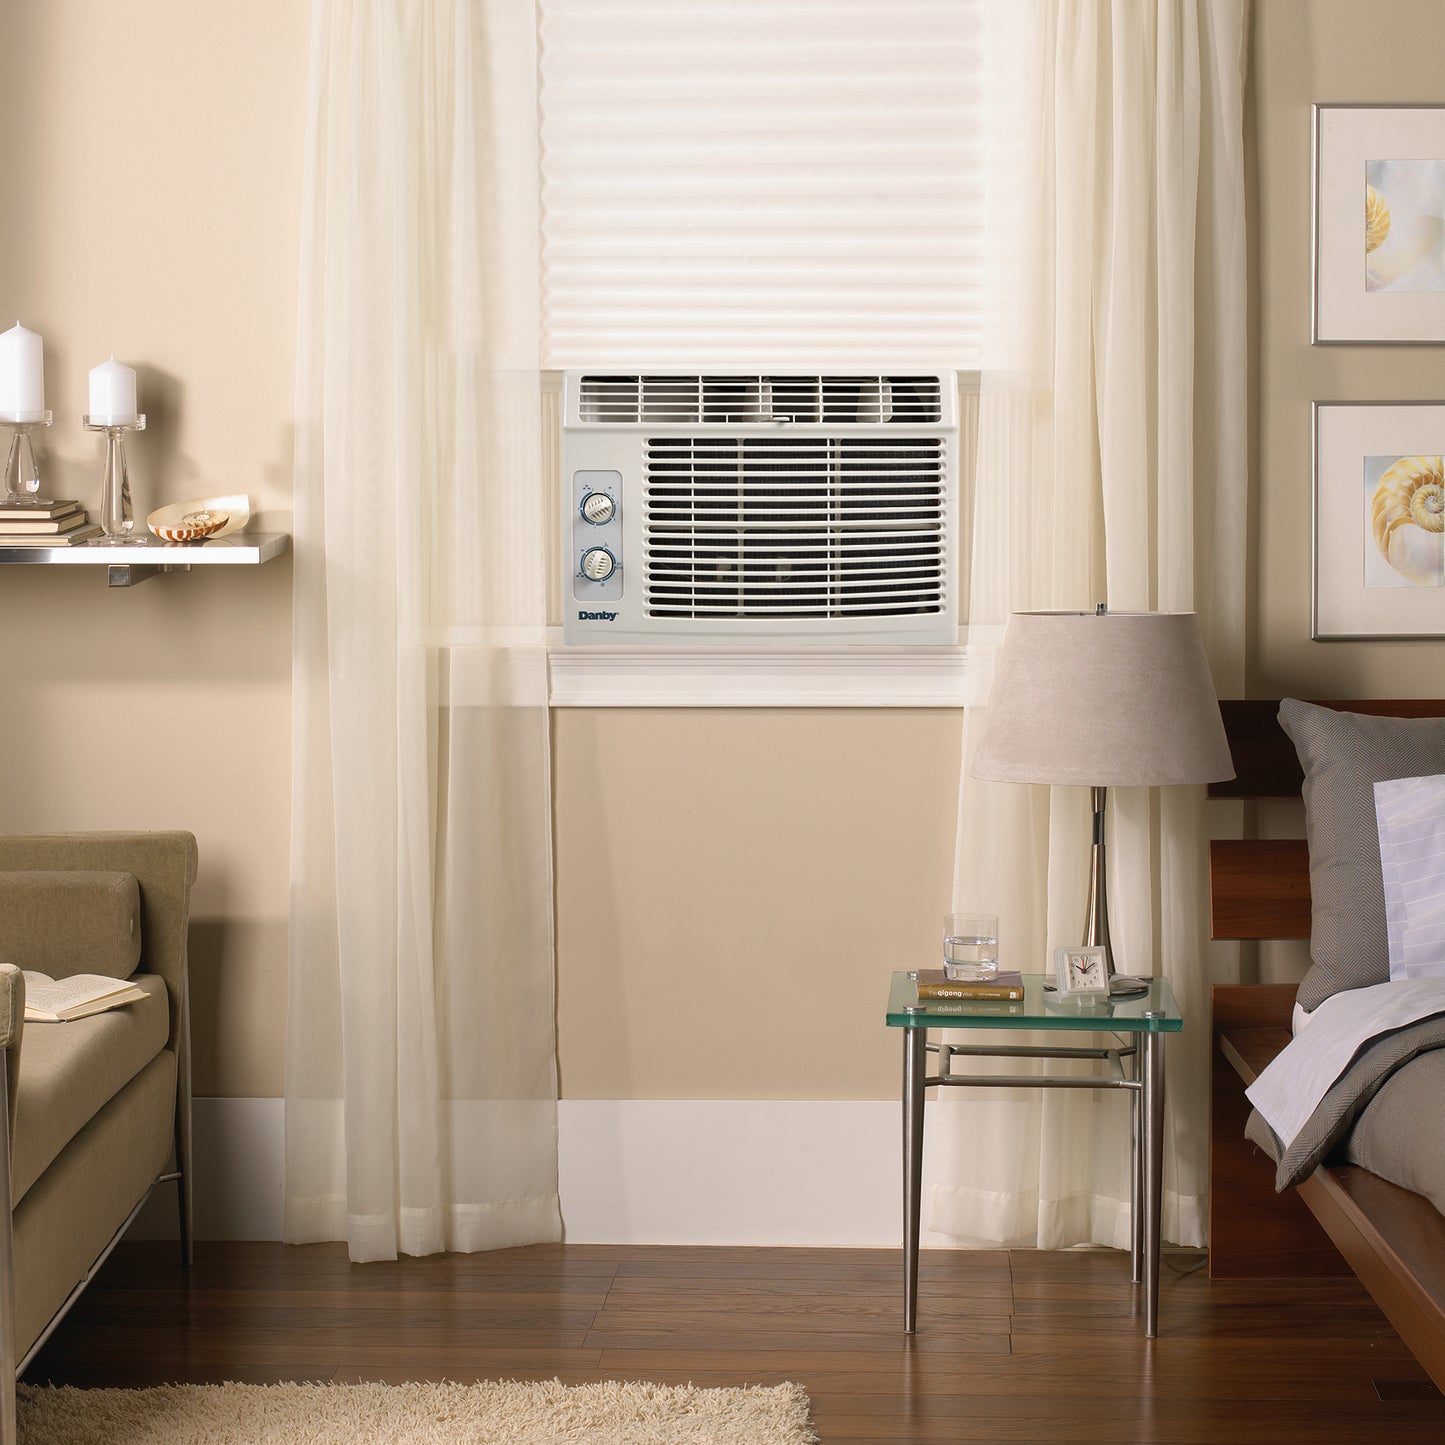 Danby 5,000 BTU Window Air Conditioner - White